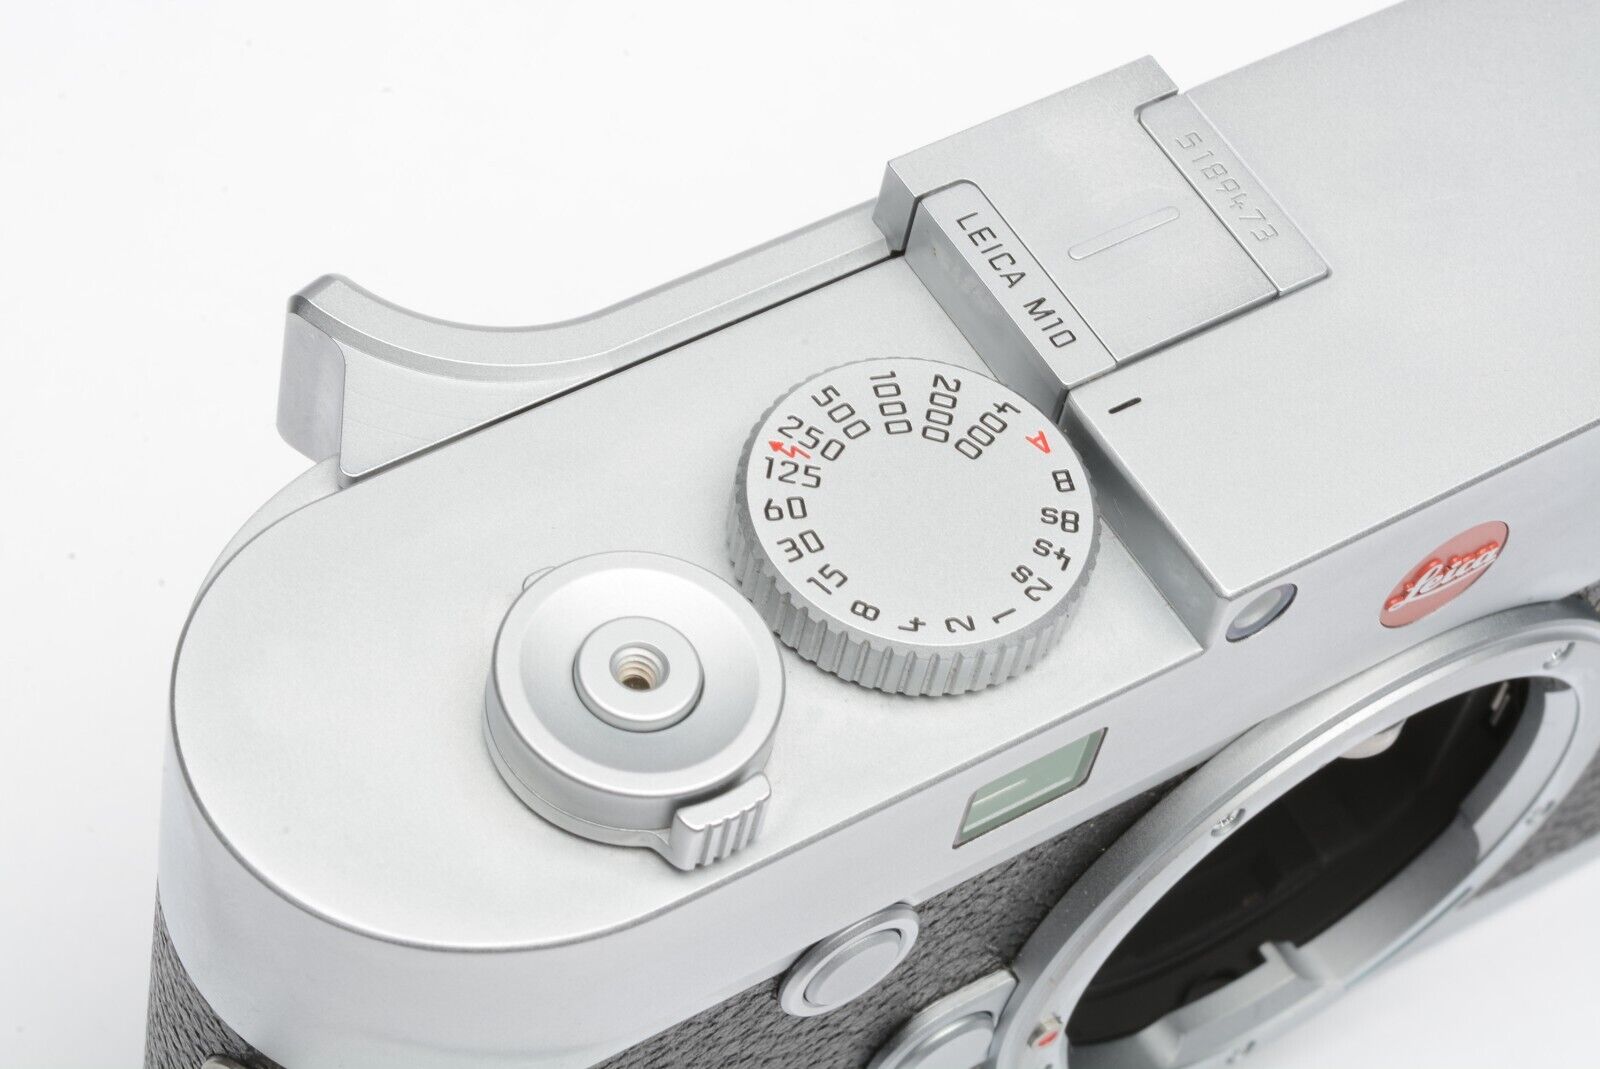 Leica M10 chrome #20001 Digital body, 2batts, thumb grip, boxed, barel –  RecycledPhoto